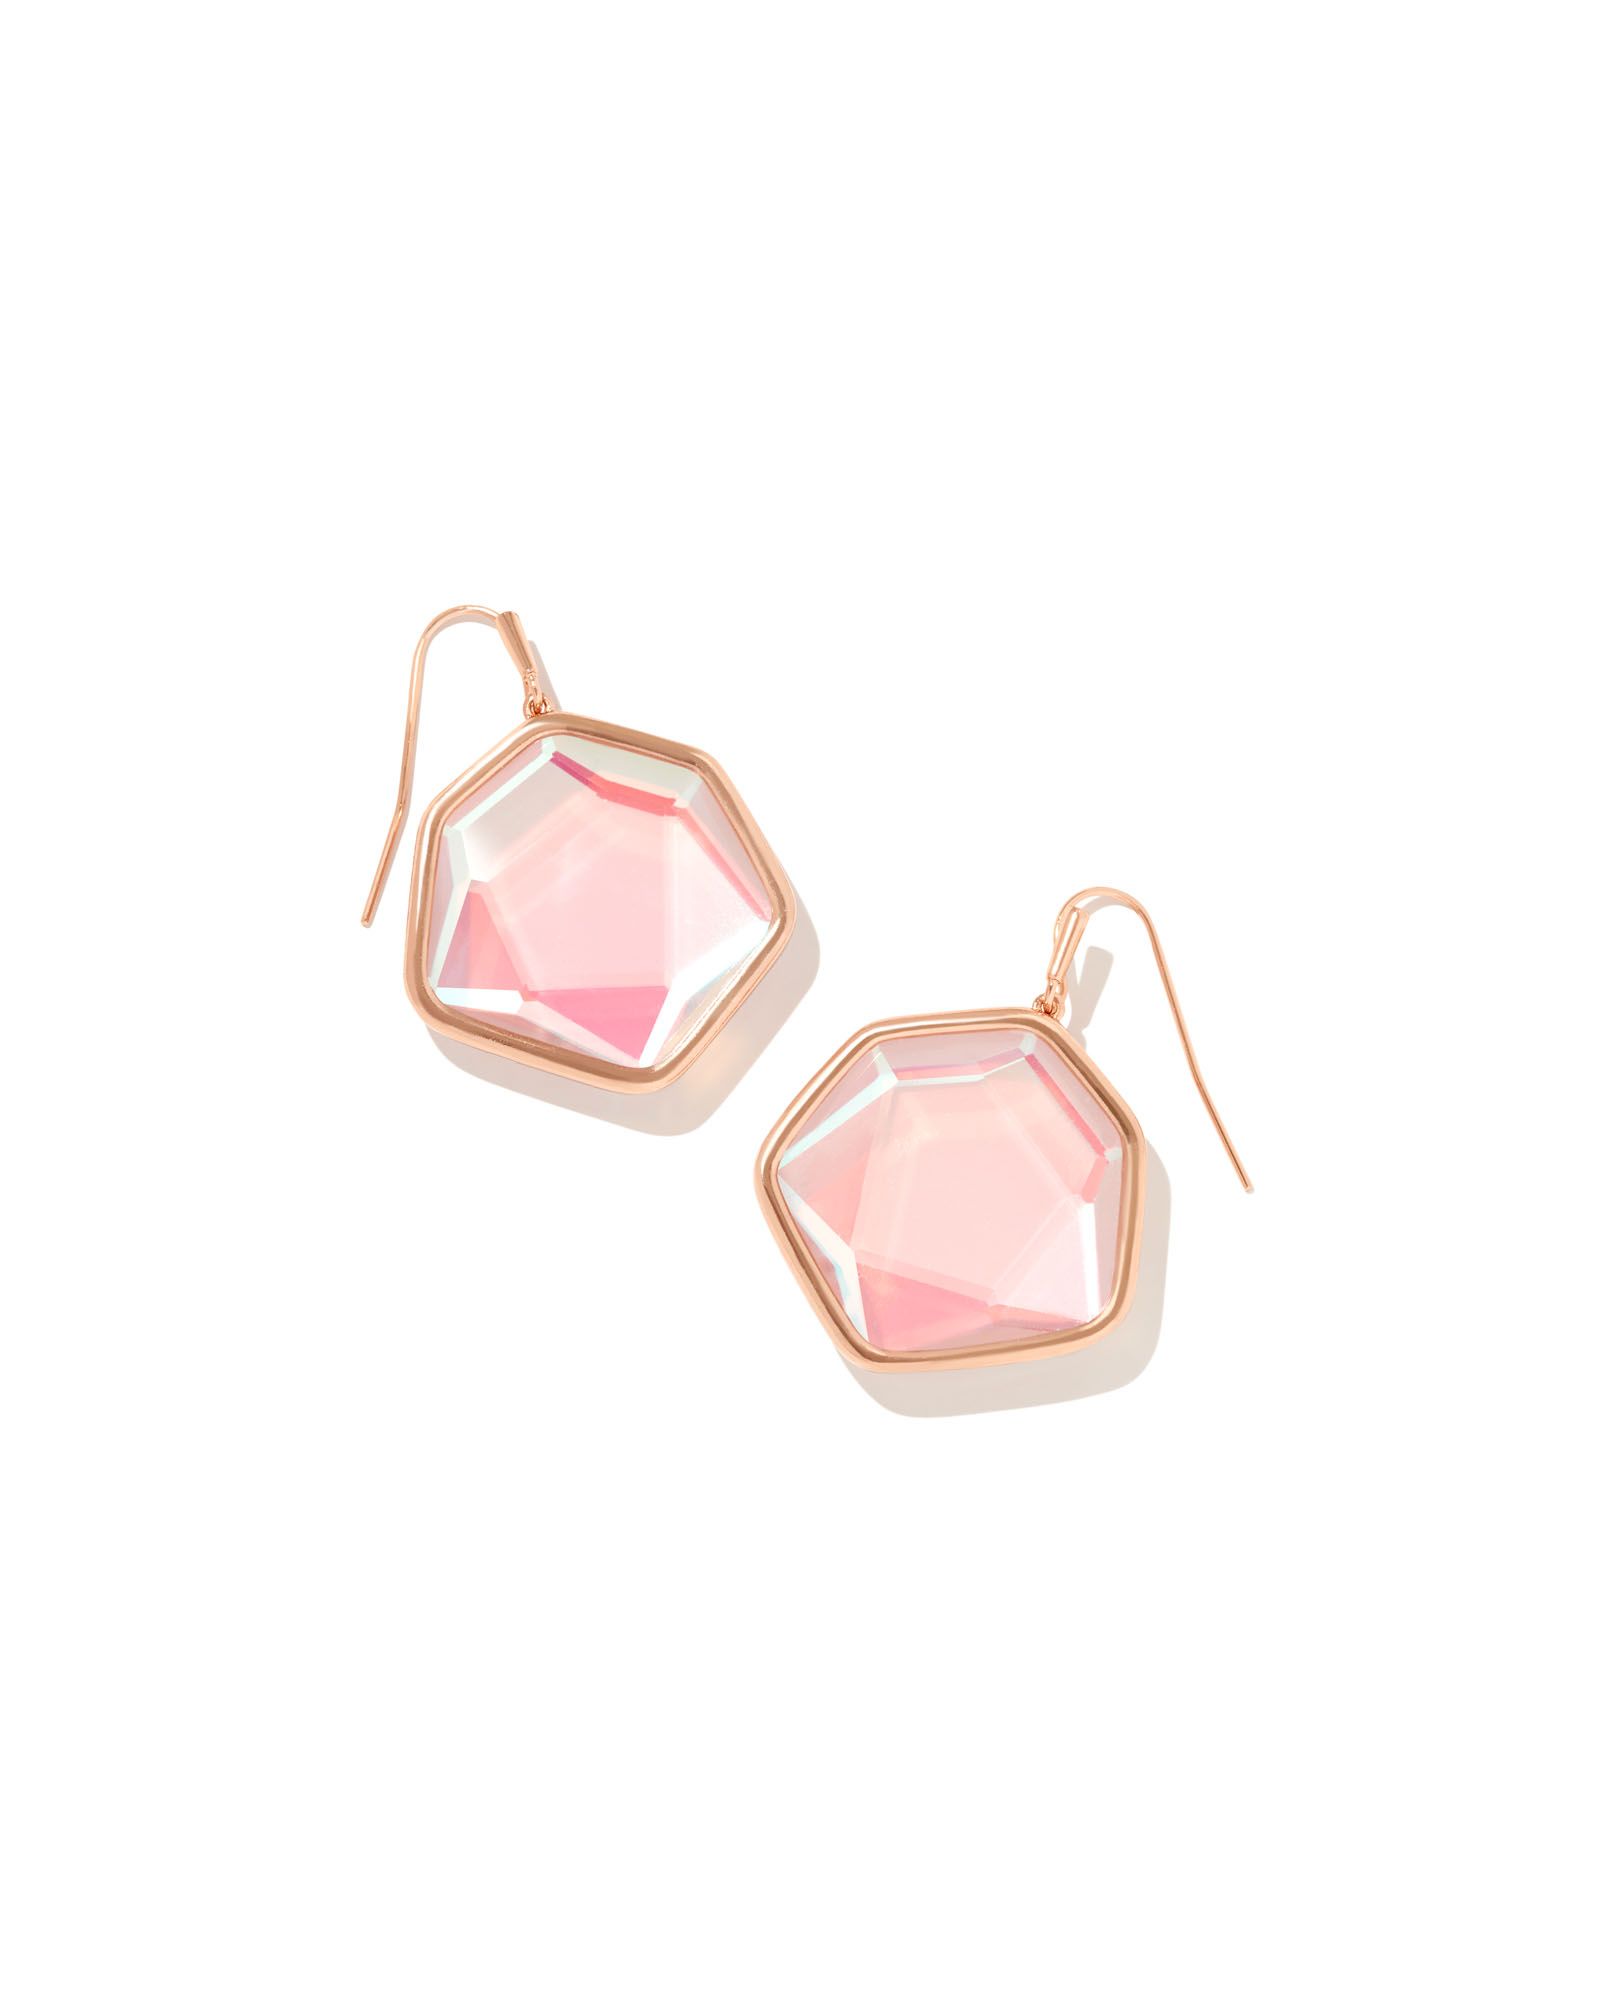 Vanessa Rose Gold Drop Earrings in Blush Dichroic Glass | Kendra Scott